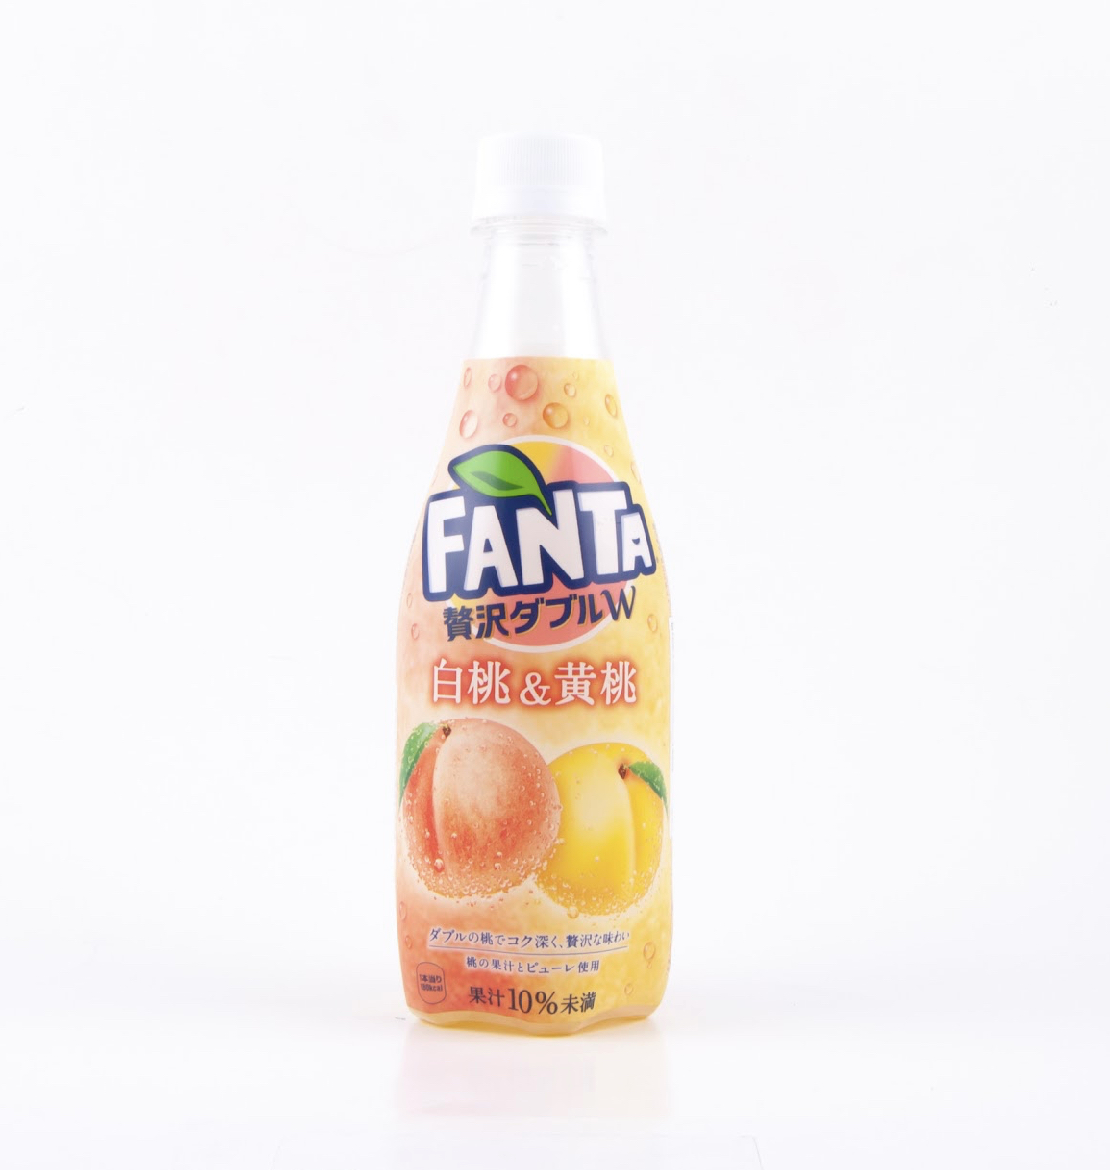 Japanese Double Peach Fanta Soda